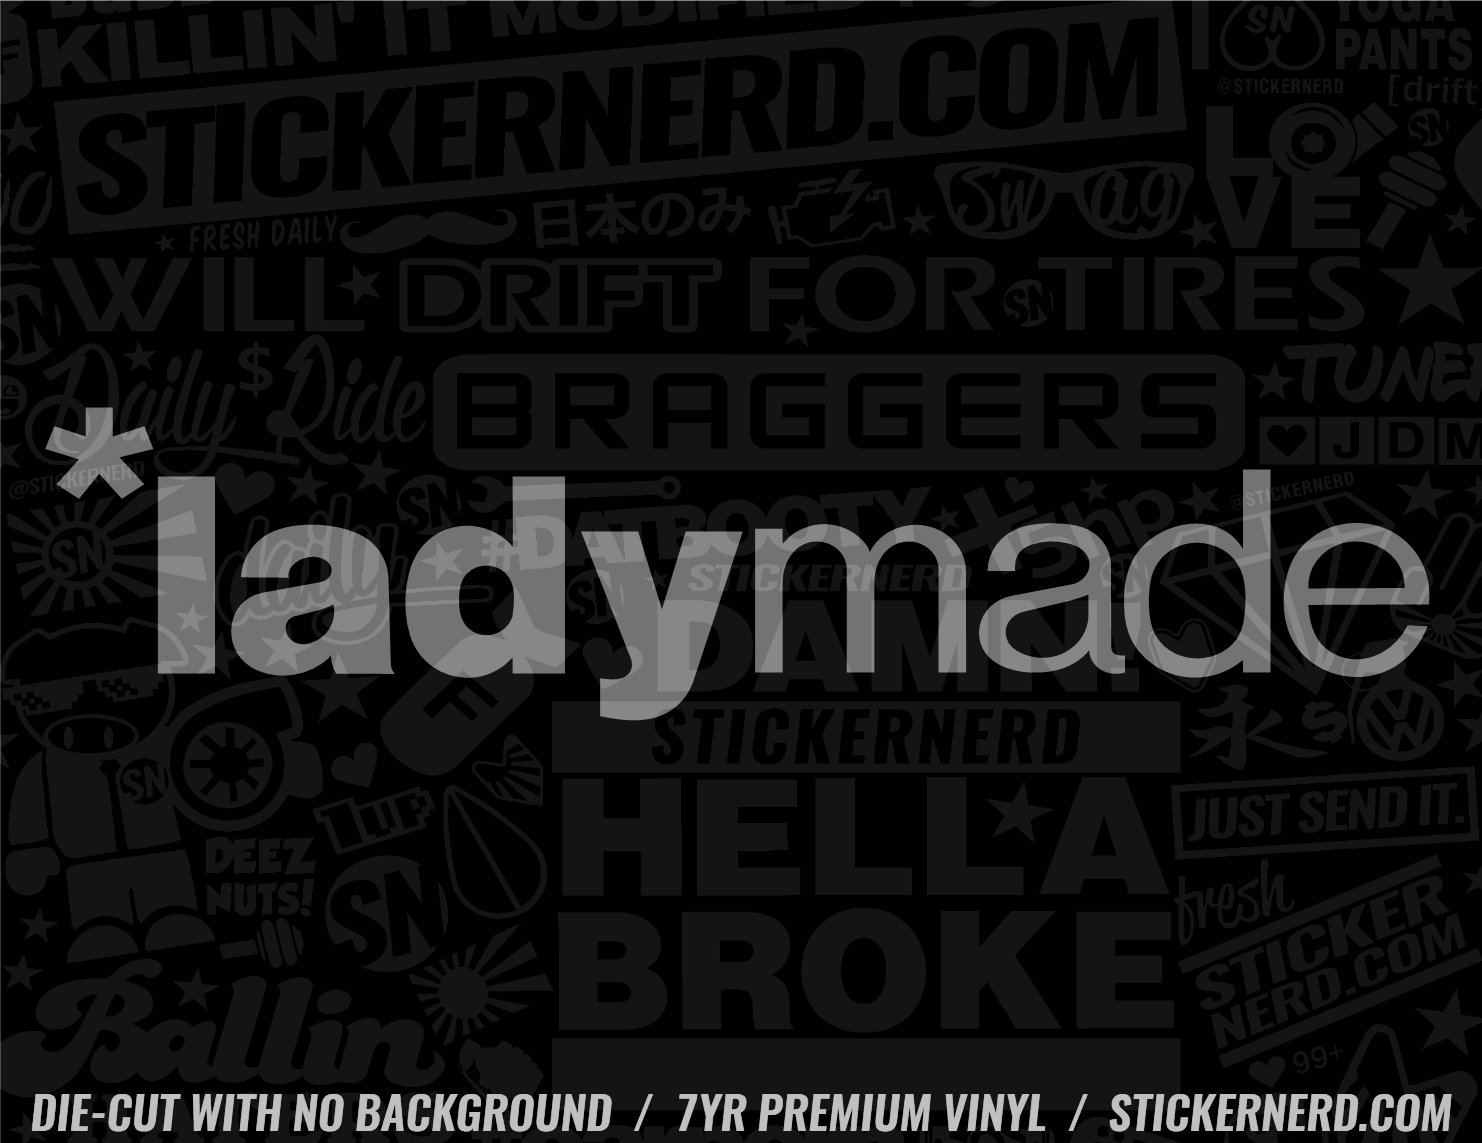 Lady Made Sticker - Decal - STICKERNERD.COM